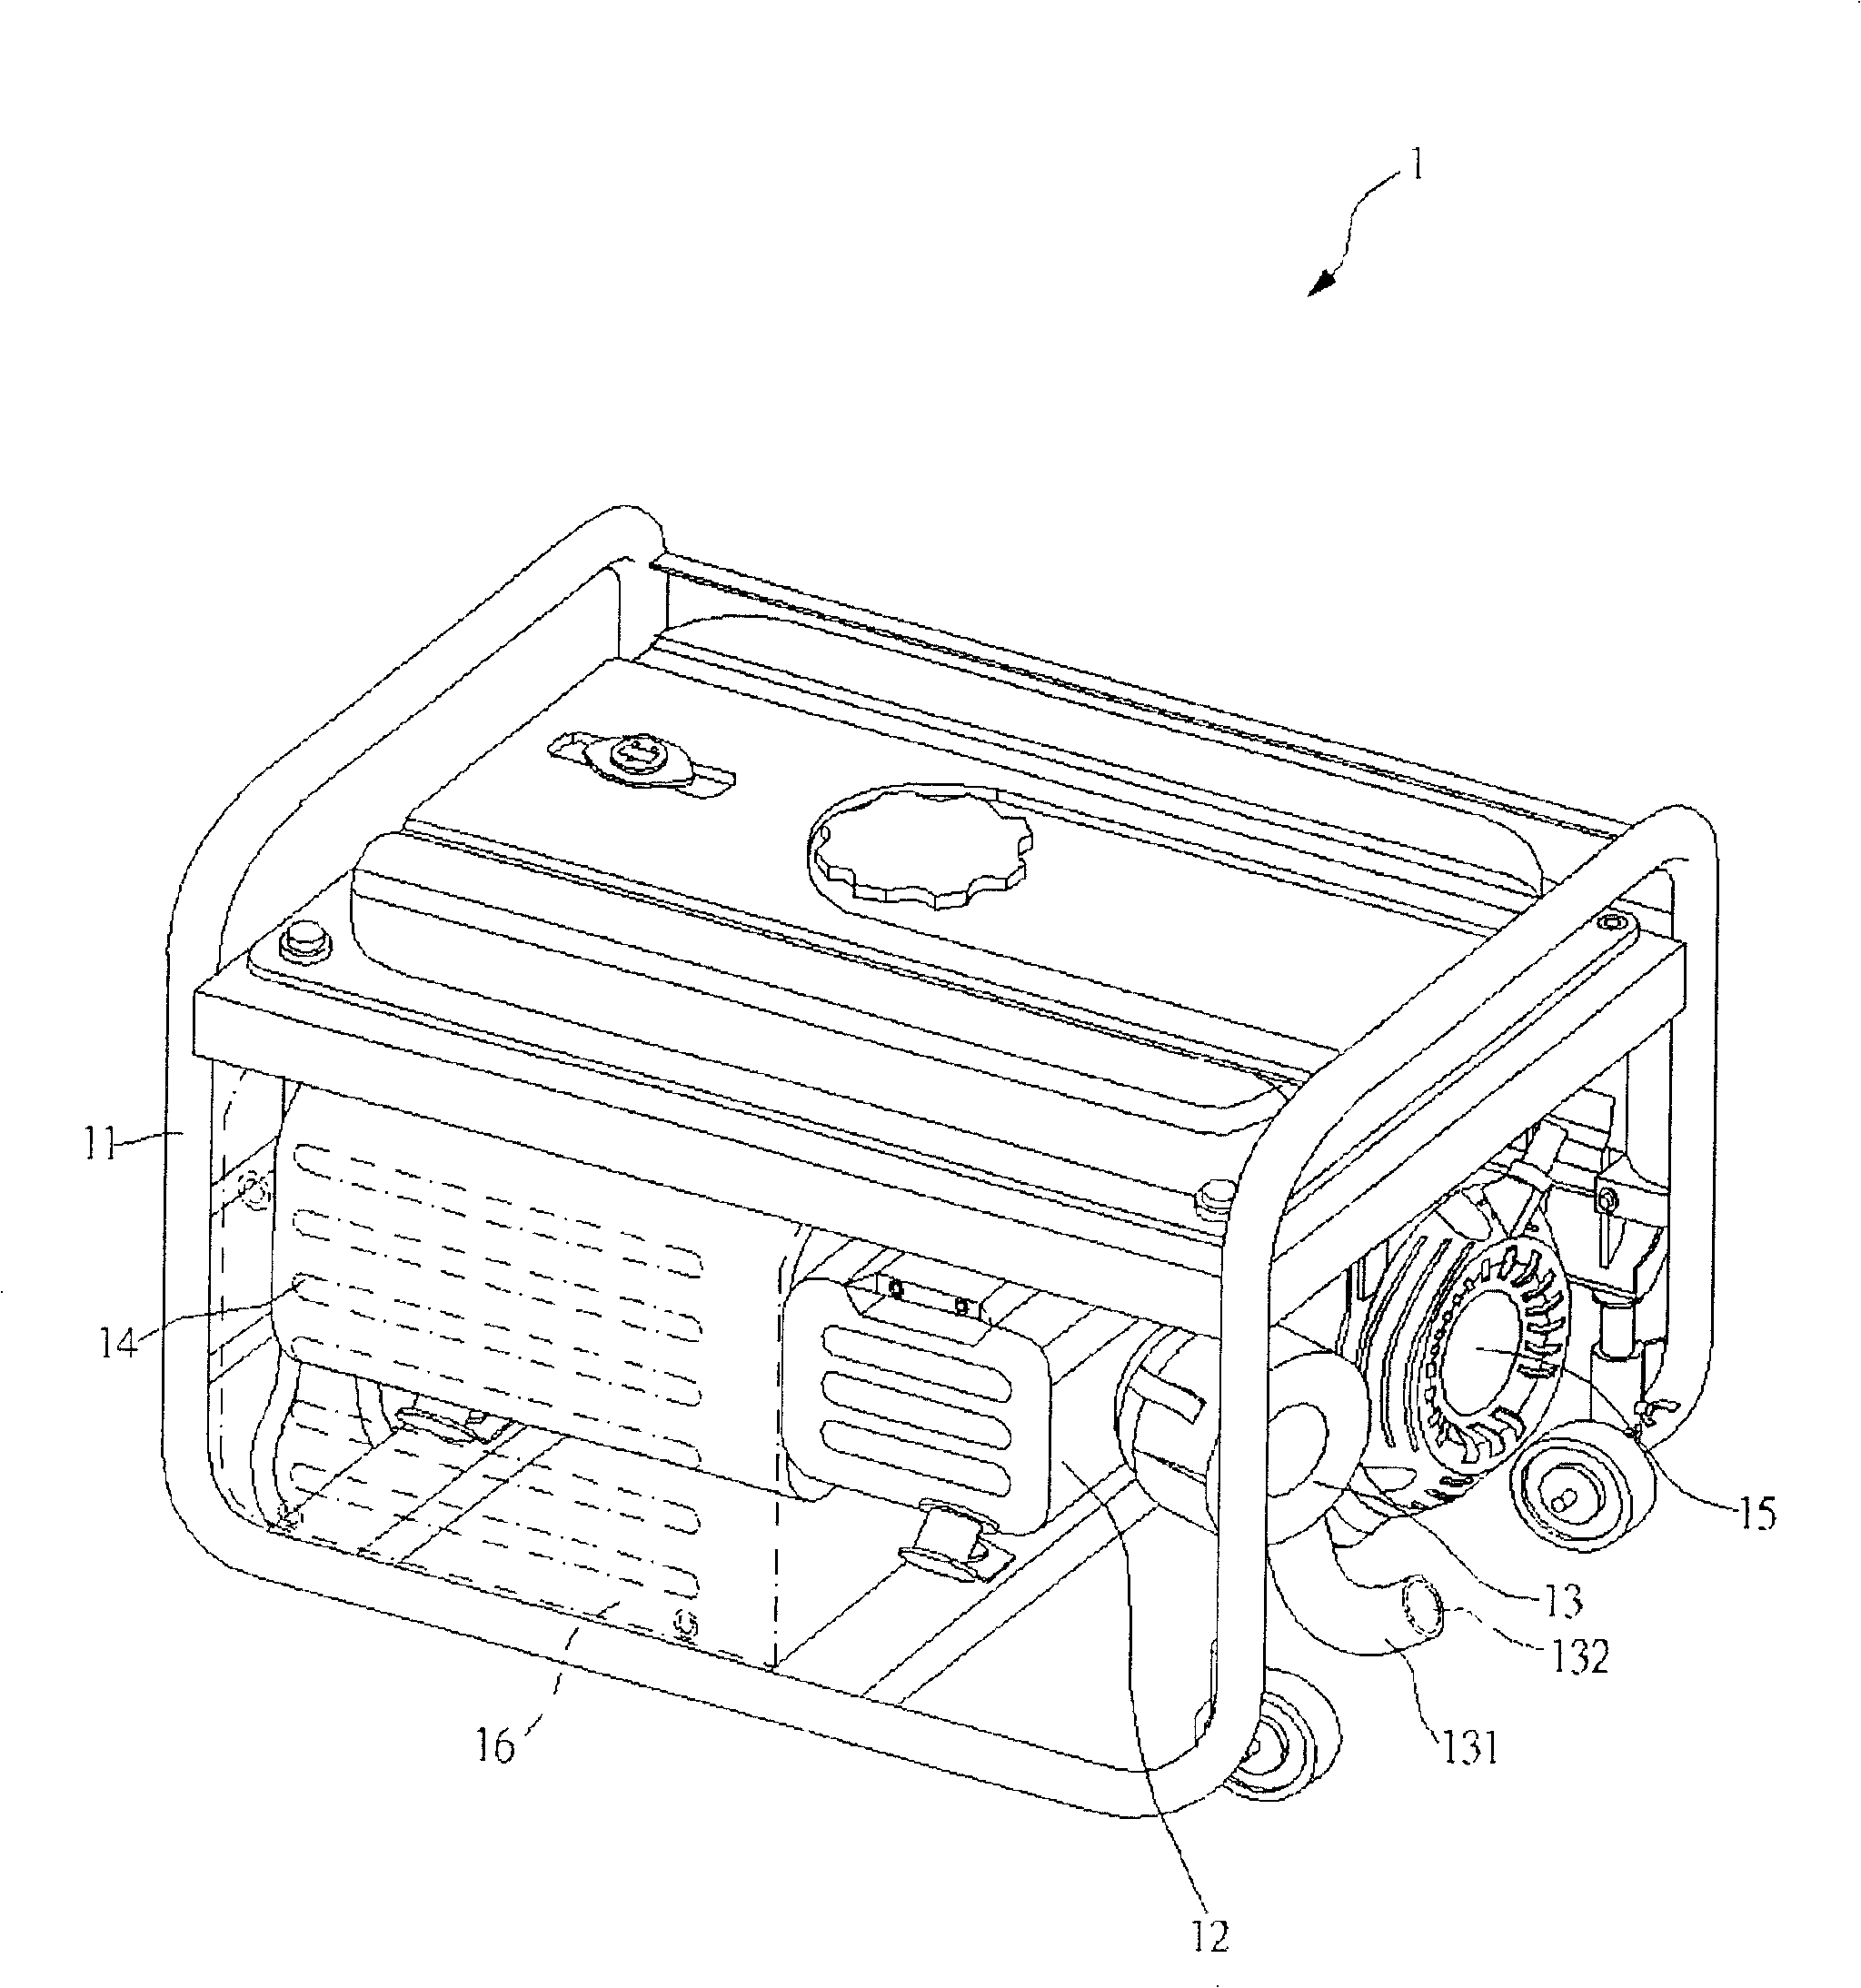 Generator air intake device